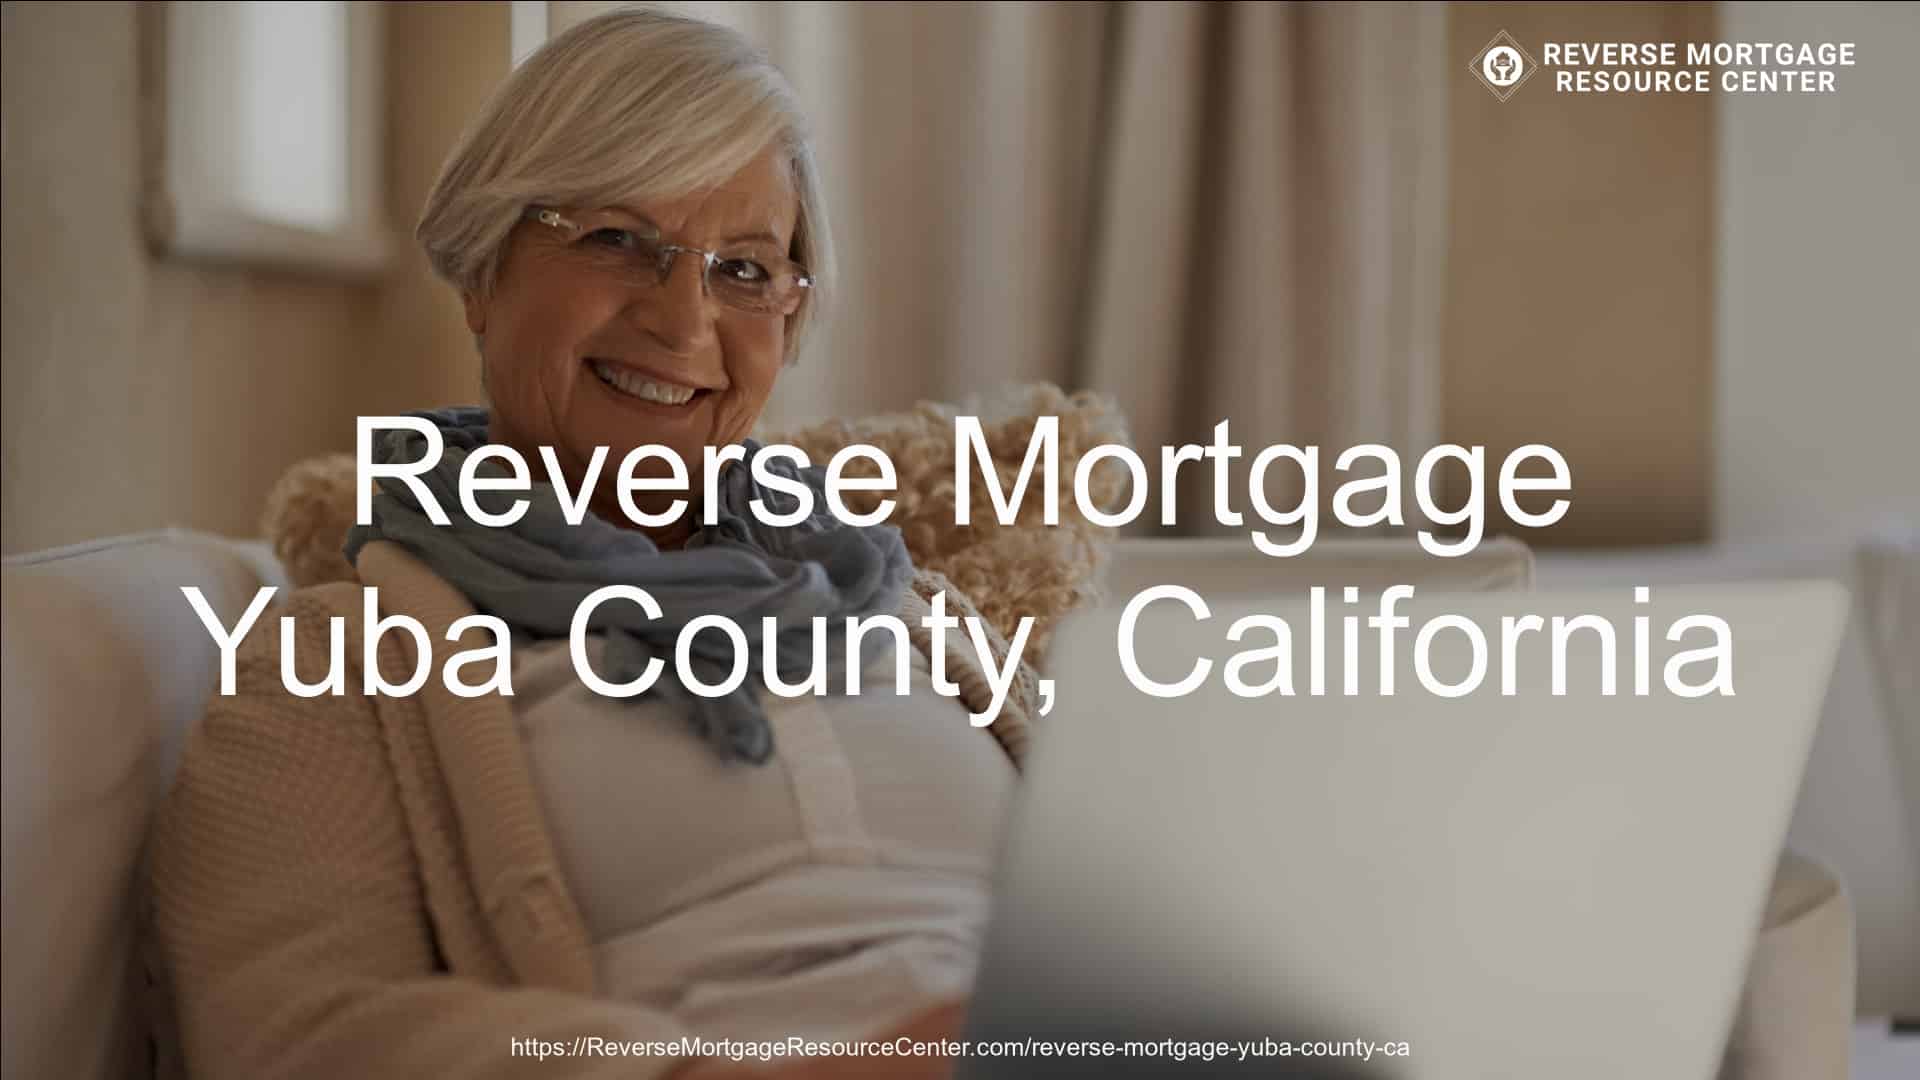 Reverse Mortgage Loans in Yuba County California